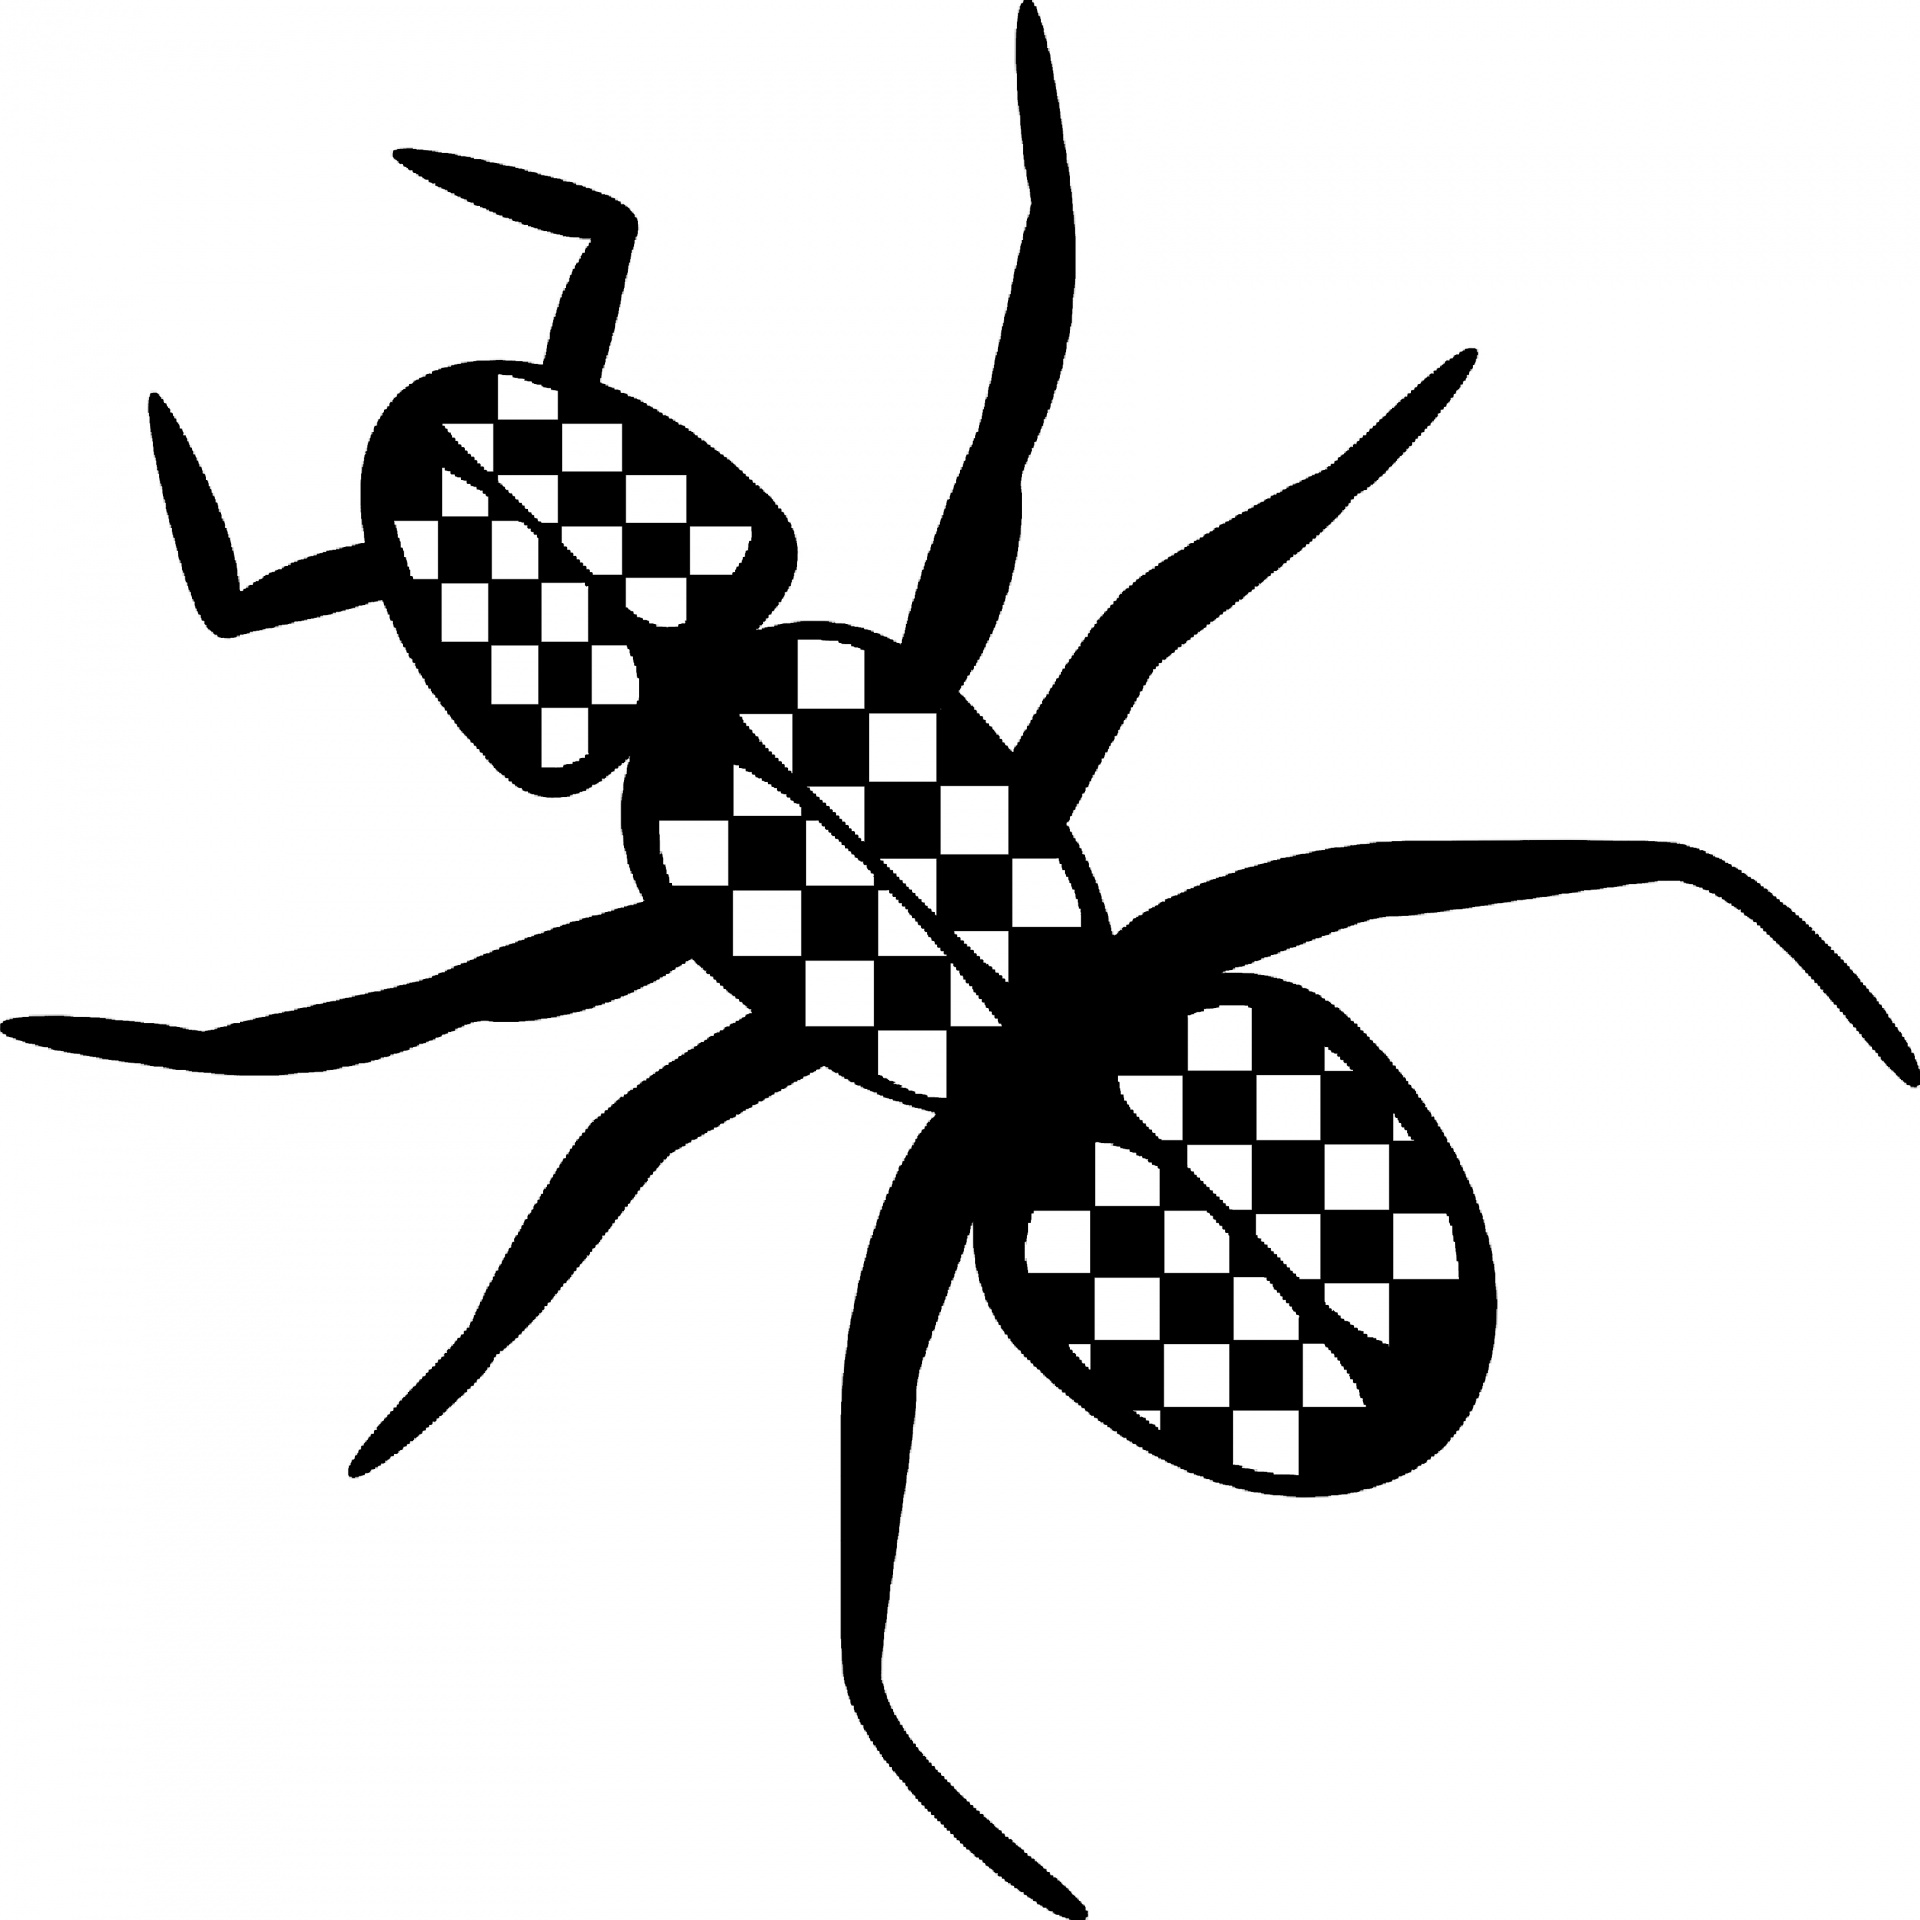 ant checker pattern free photo